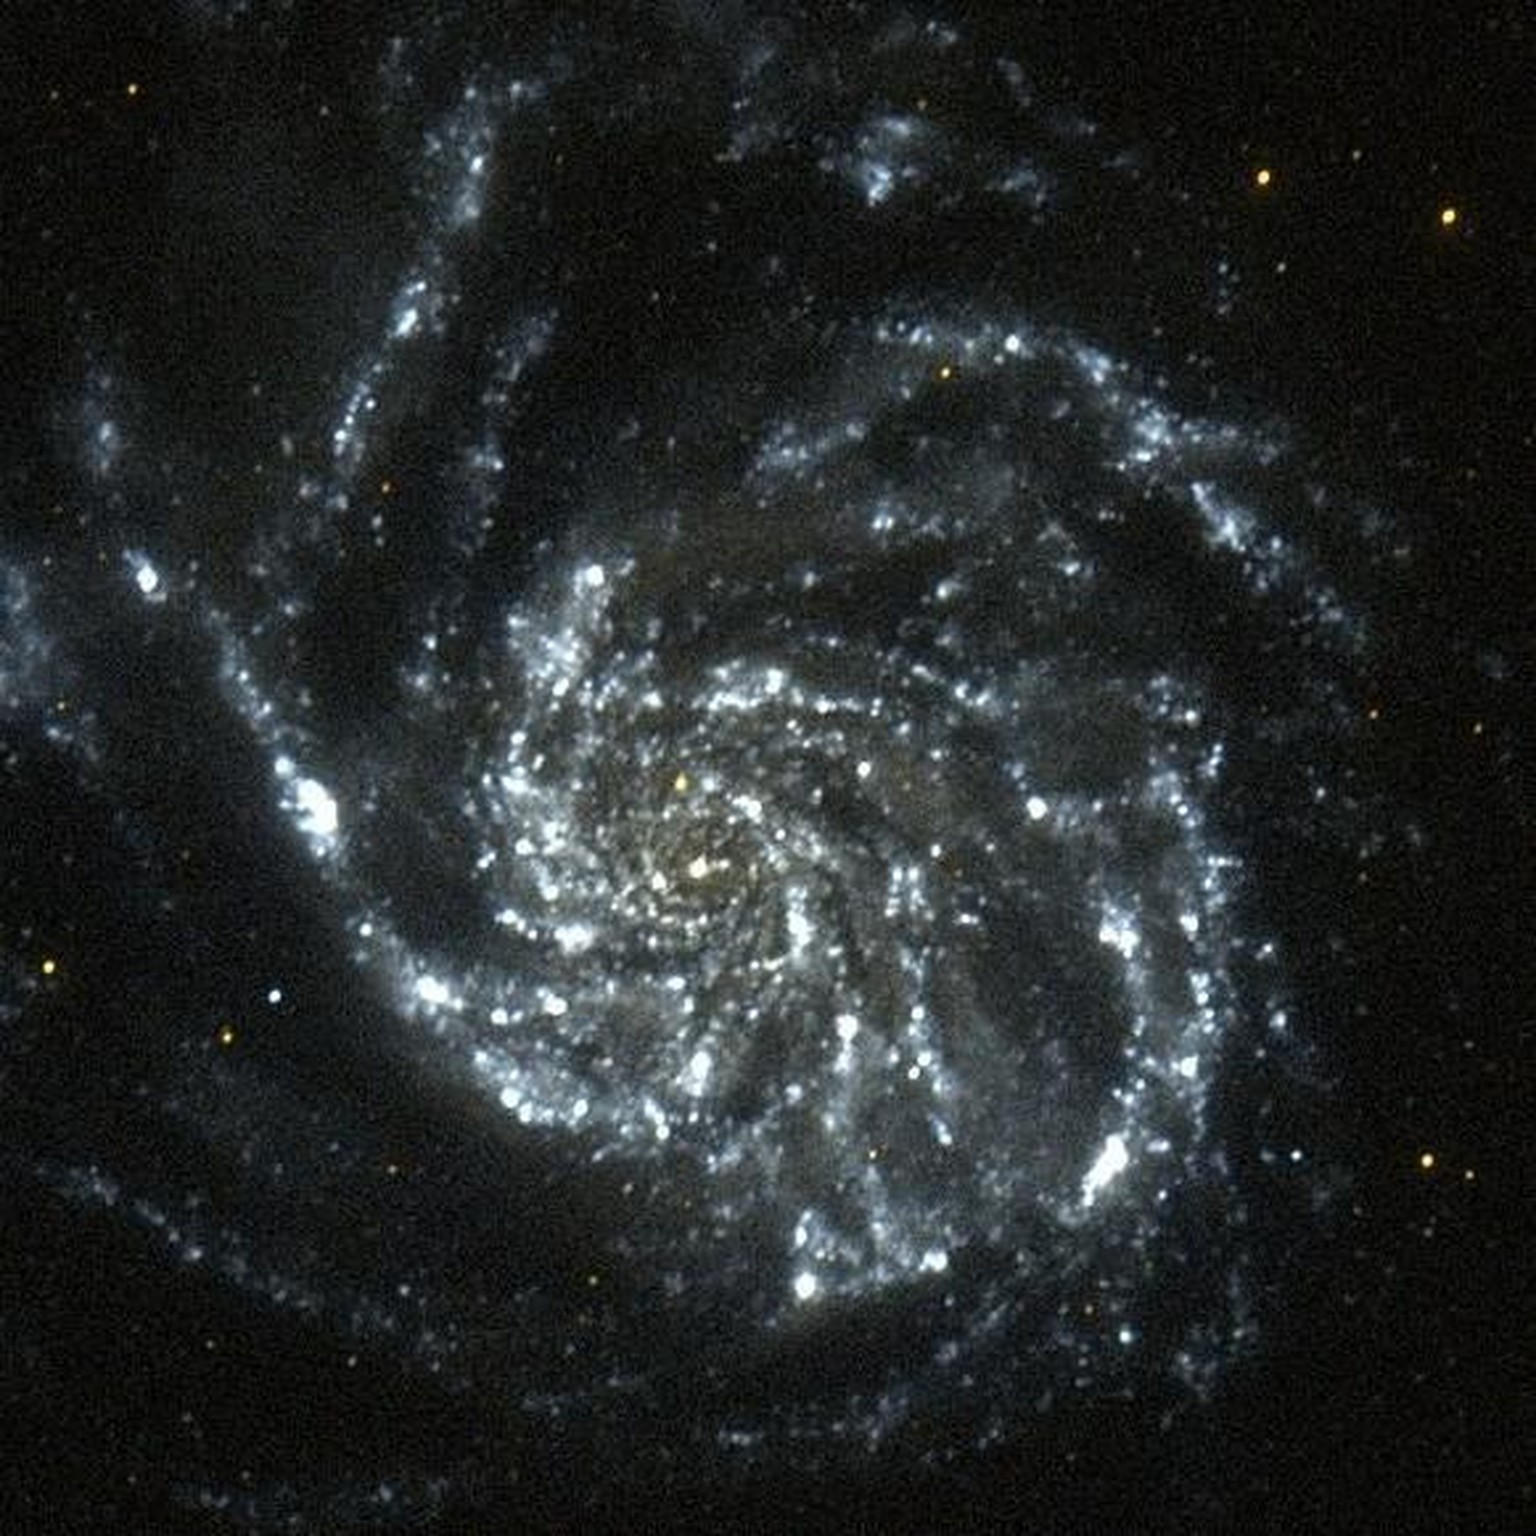 Galaxie Messier 101 (NGC 5457, Pinwheel-Galaxie oder Feuerrad-Galaxie), Ultraviolettaufnahme des GALEX-Weltraumteleskops
https://de.wikipedia.org/wiki/Messier_101#/media/Datei:Glx2008-01f_img02.jpg